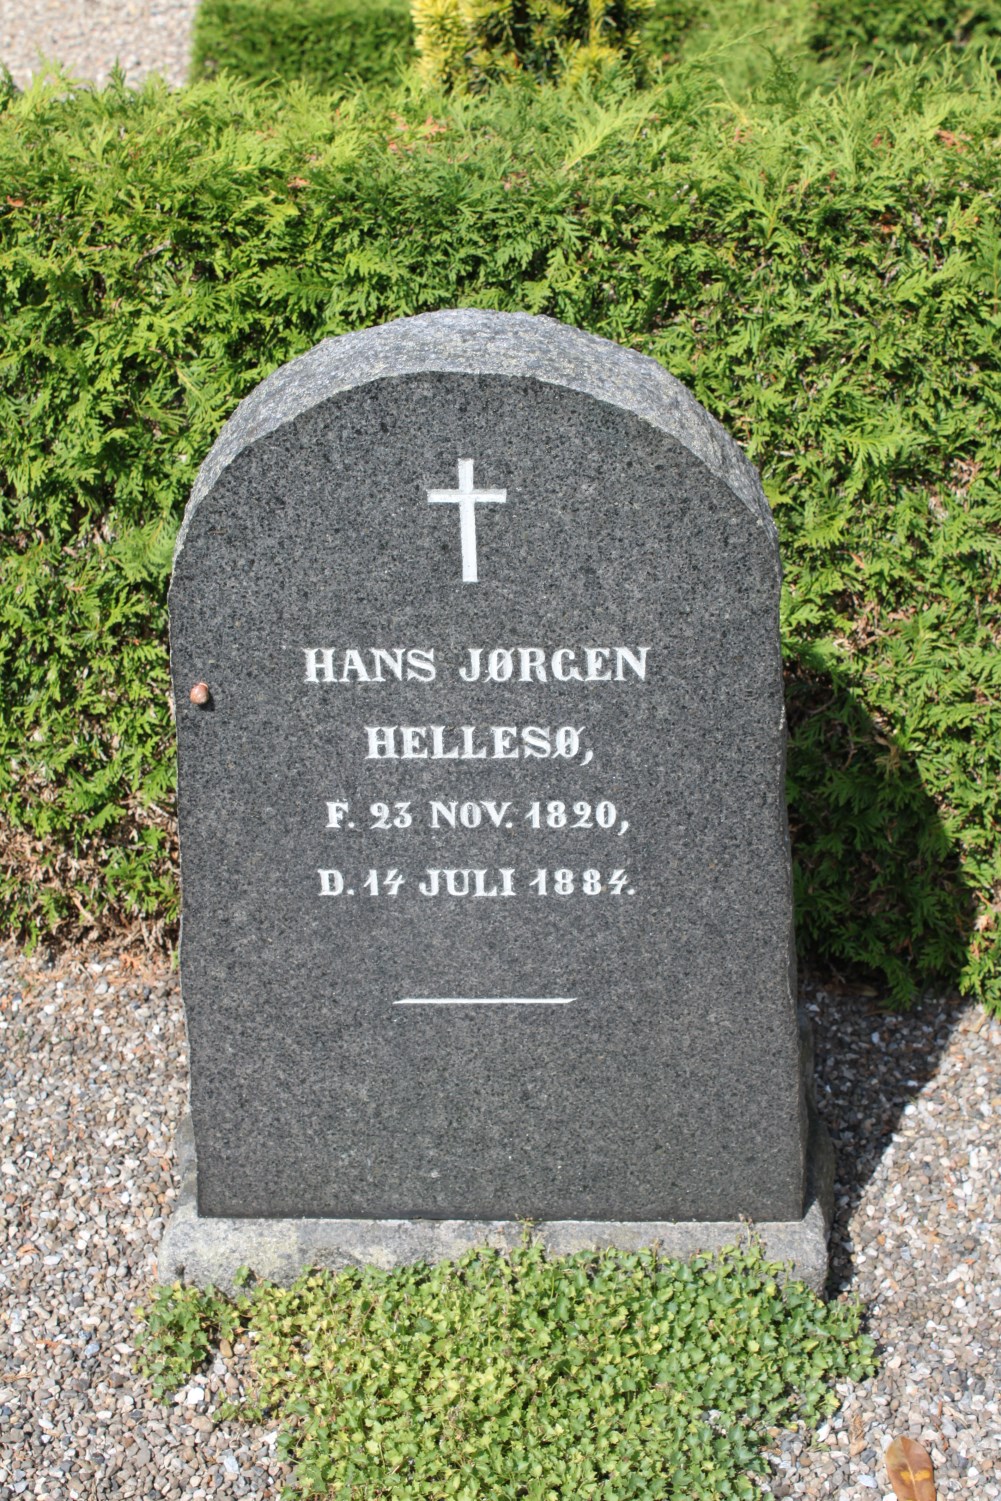 Hans Jørgen Hellesø.